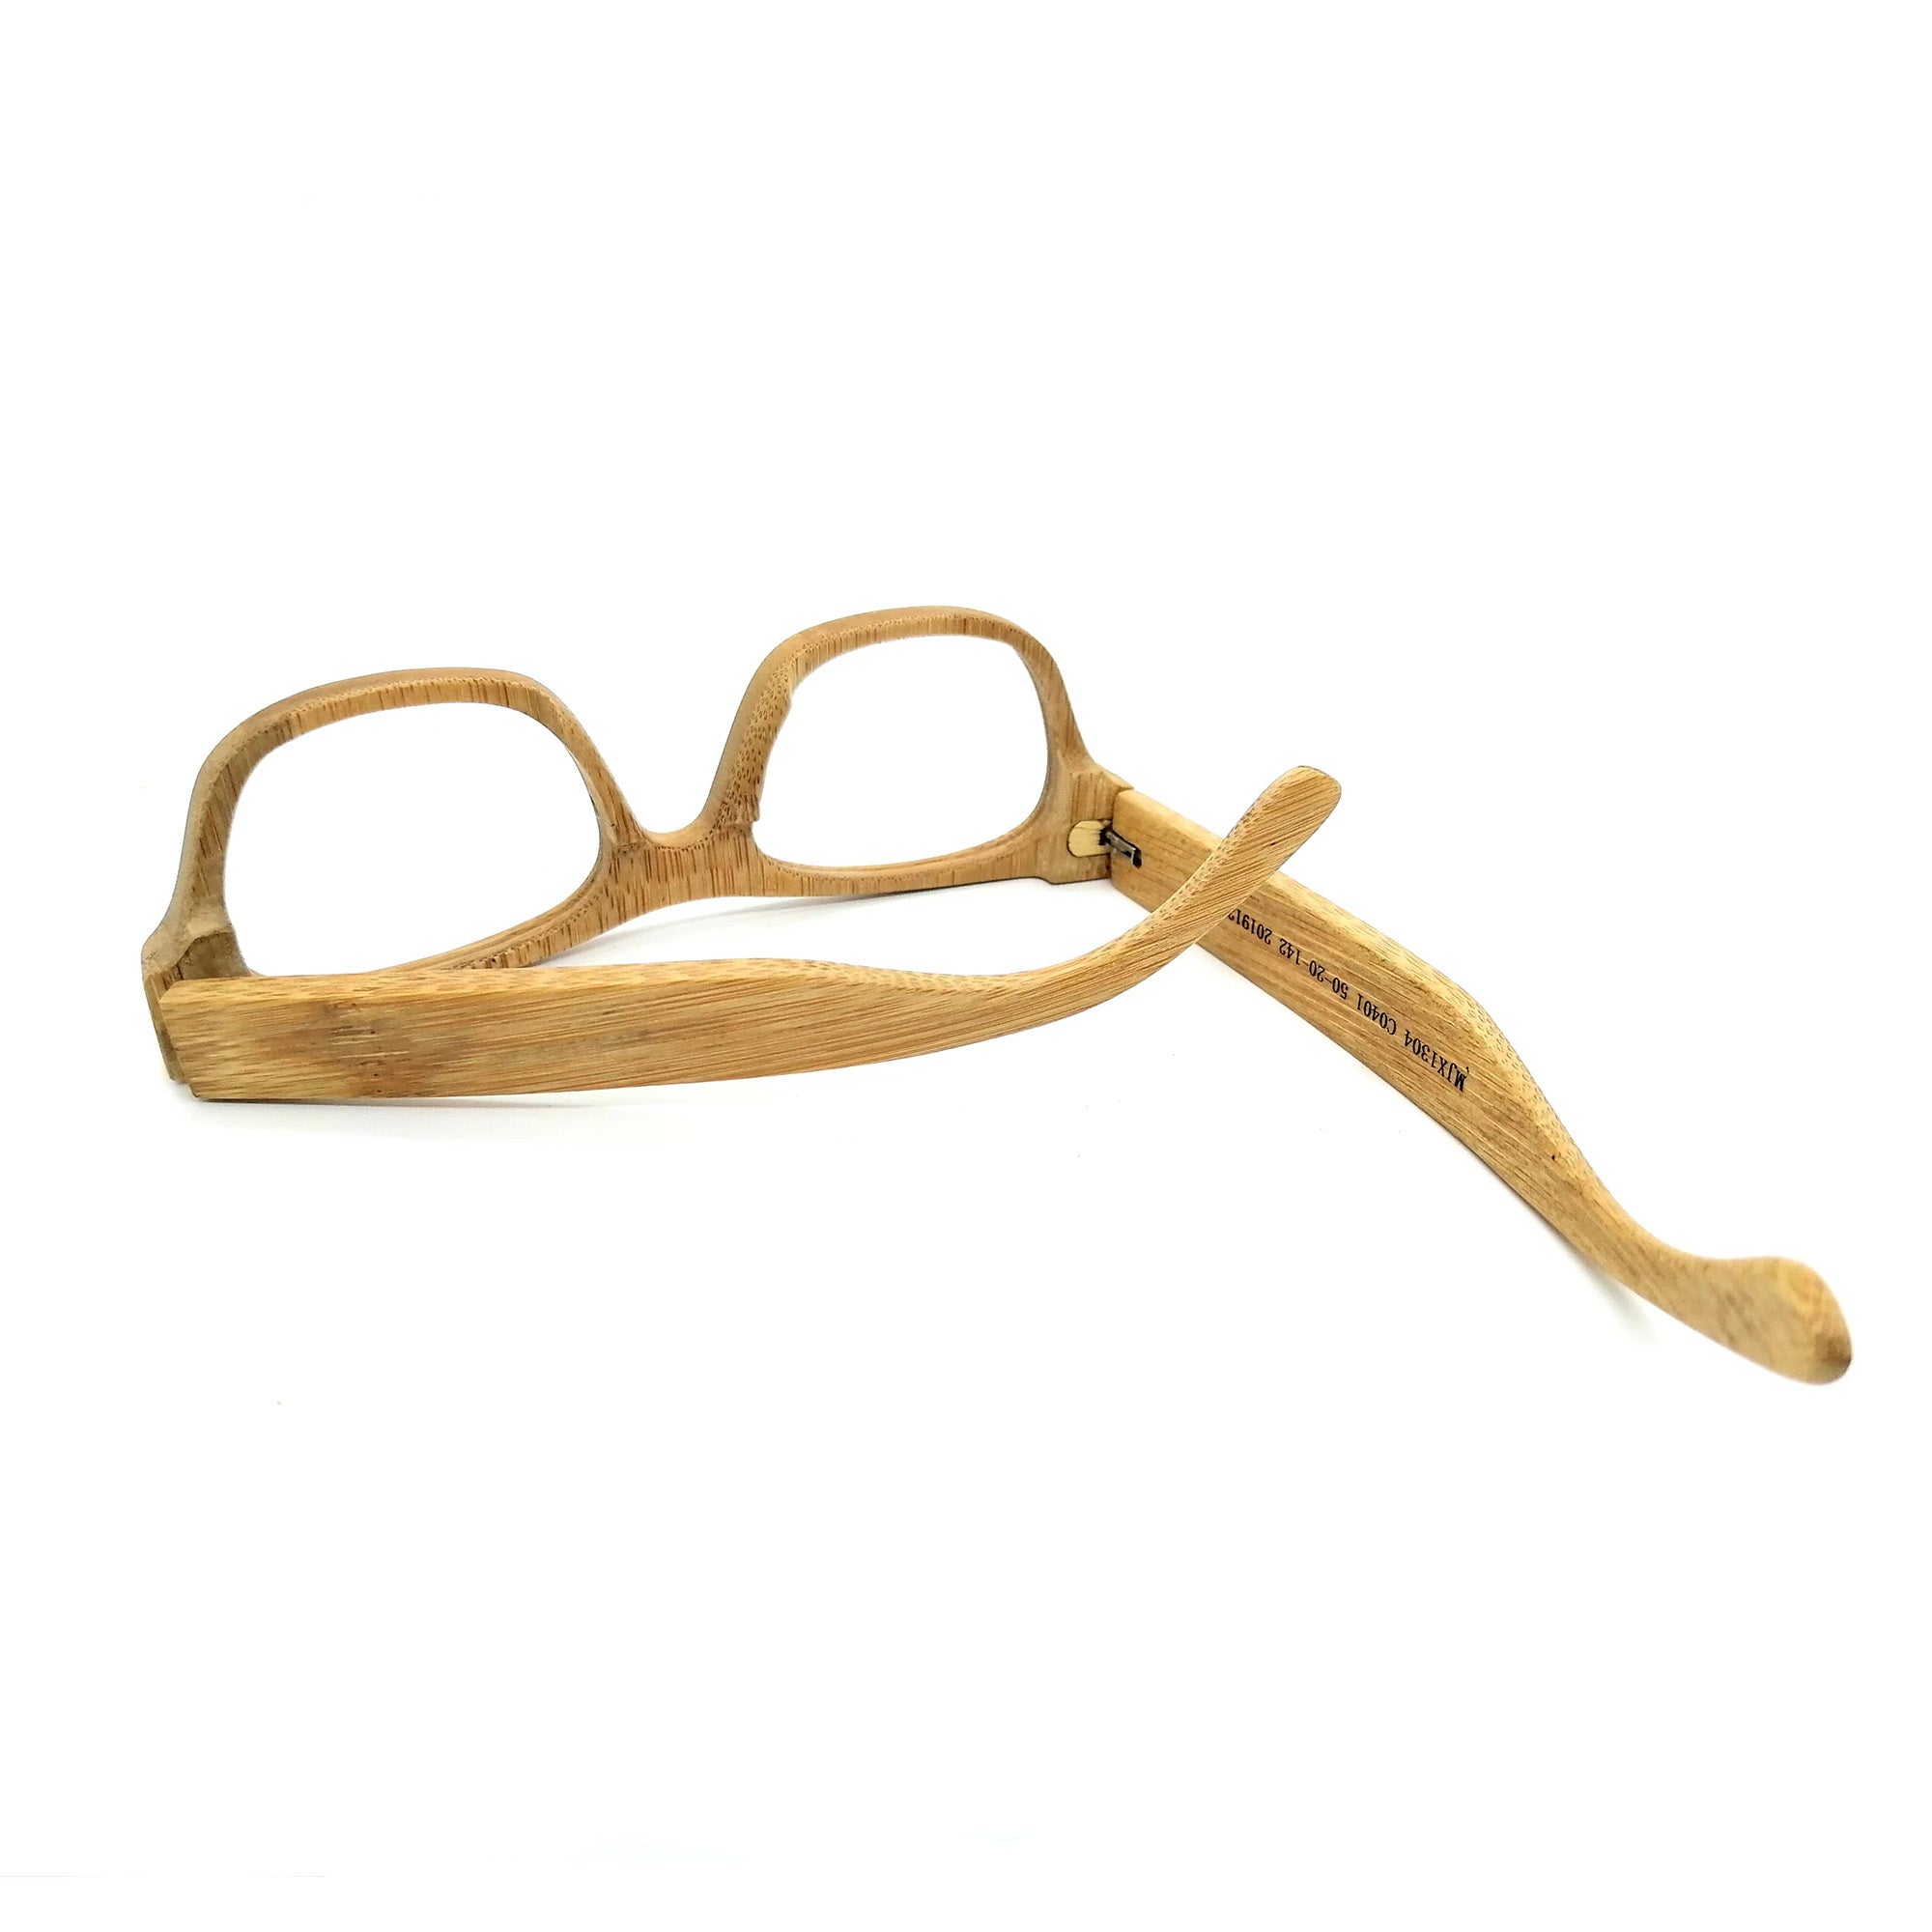 Wood Sunglasses - Unique and Handmade Wood Sunglasses